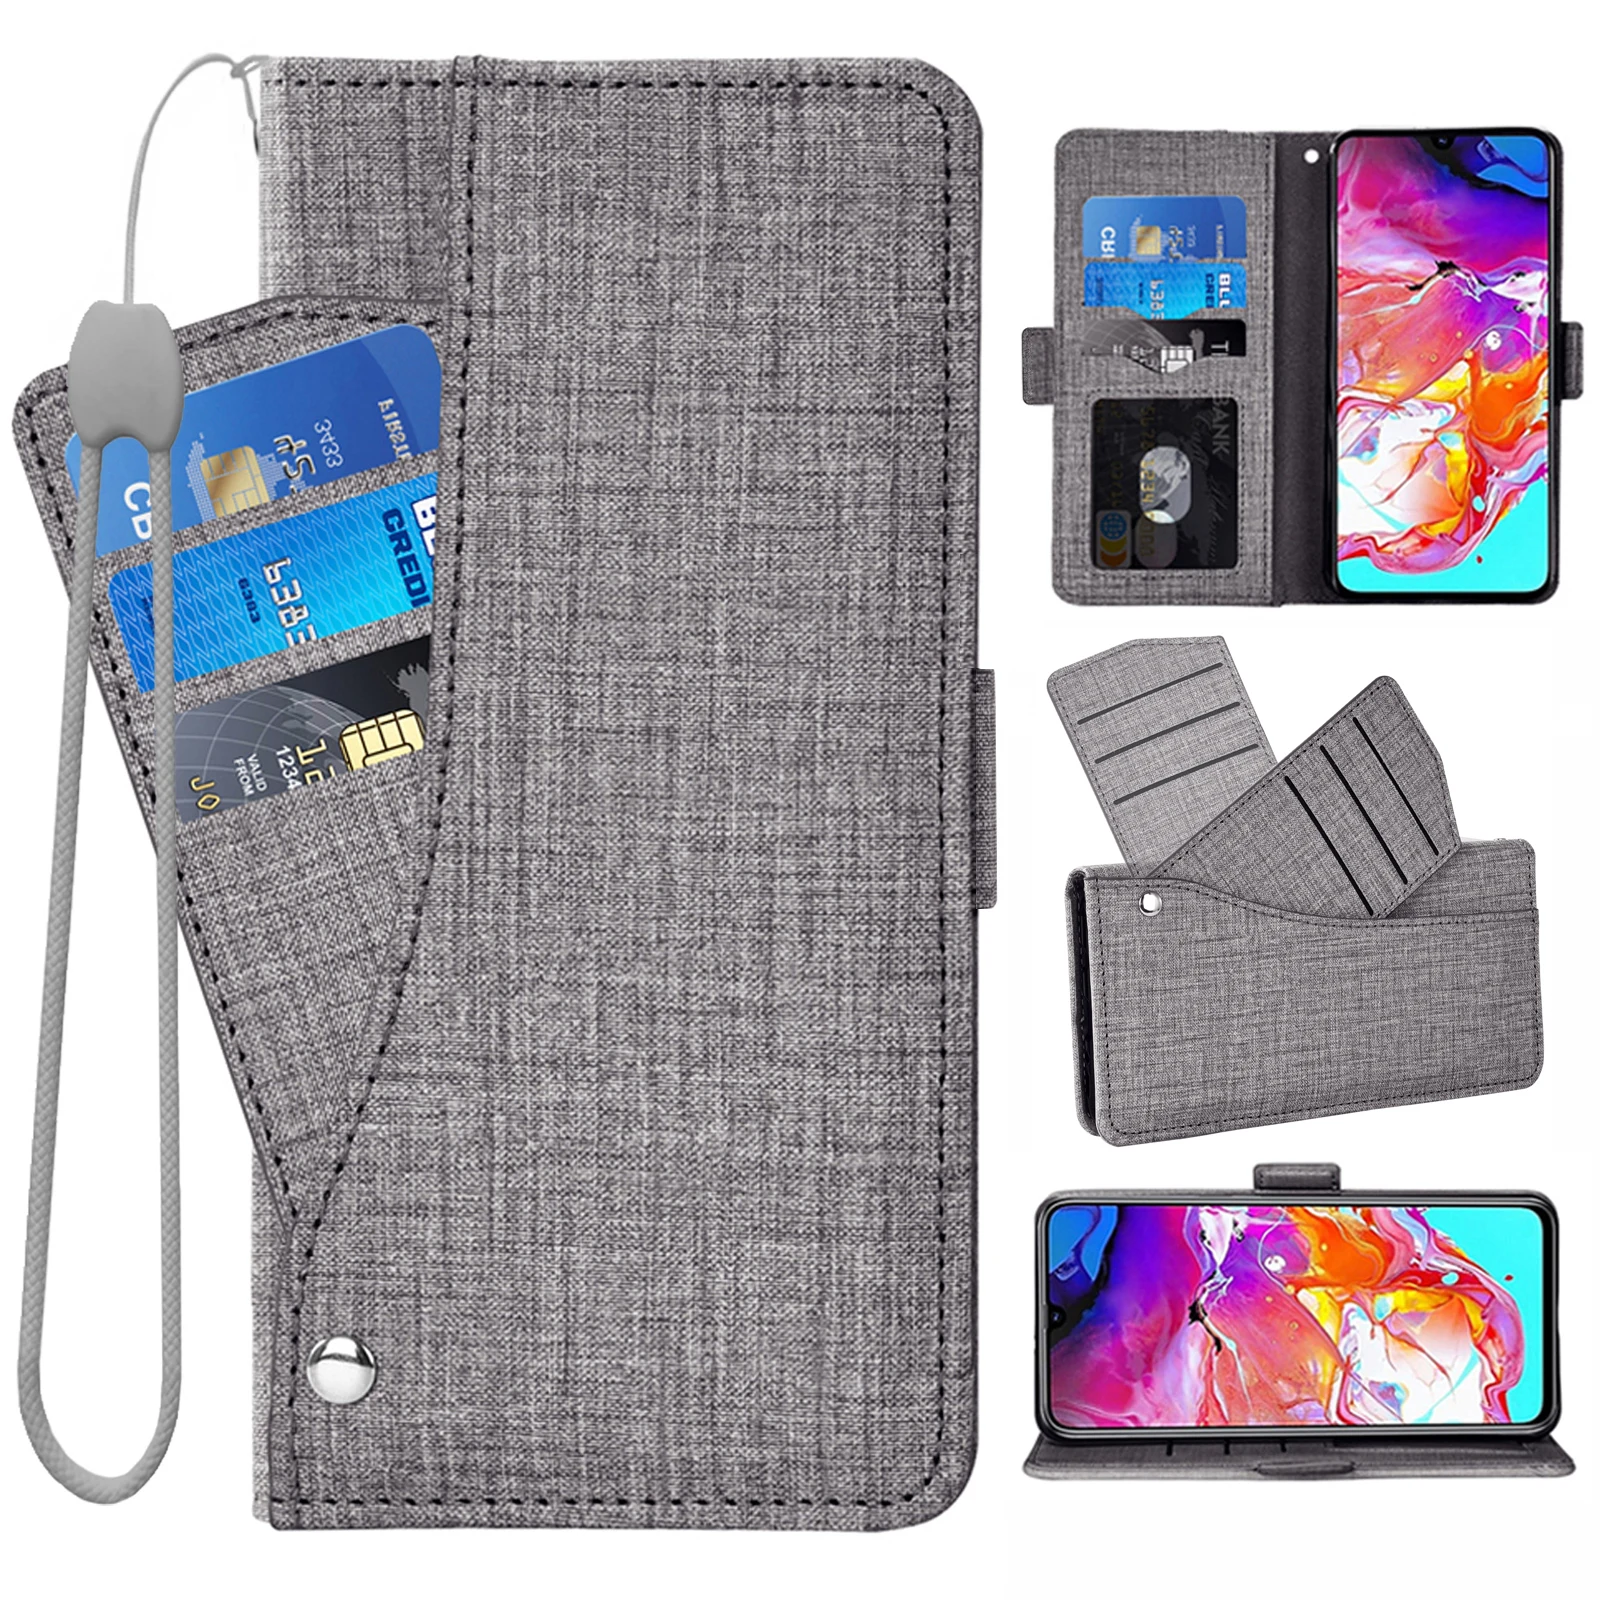 Flip Leather Wallet Case For Samsung Galaxy J1 2016 J2 Pro 2018 J3 2017 J5 J7 2015 J4 J6 Plus J8 Grand Prime Magnet Phone Cover